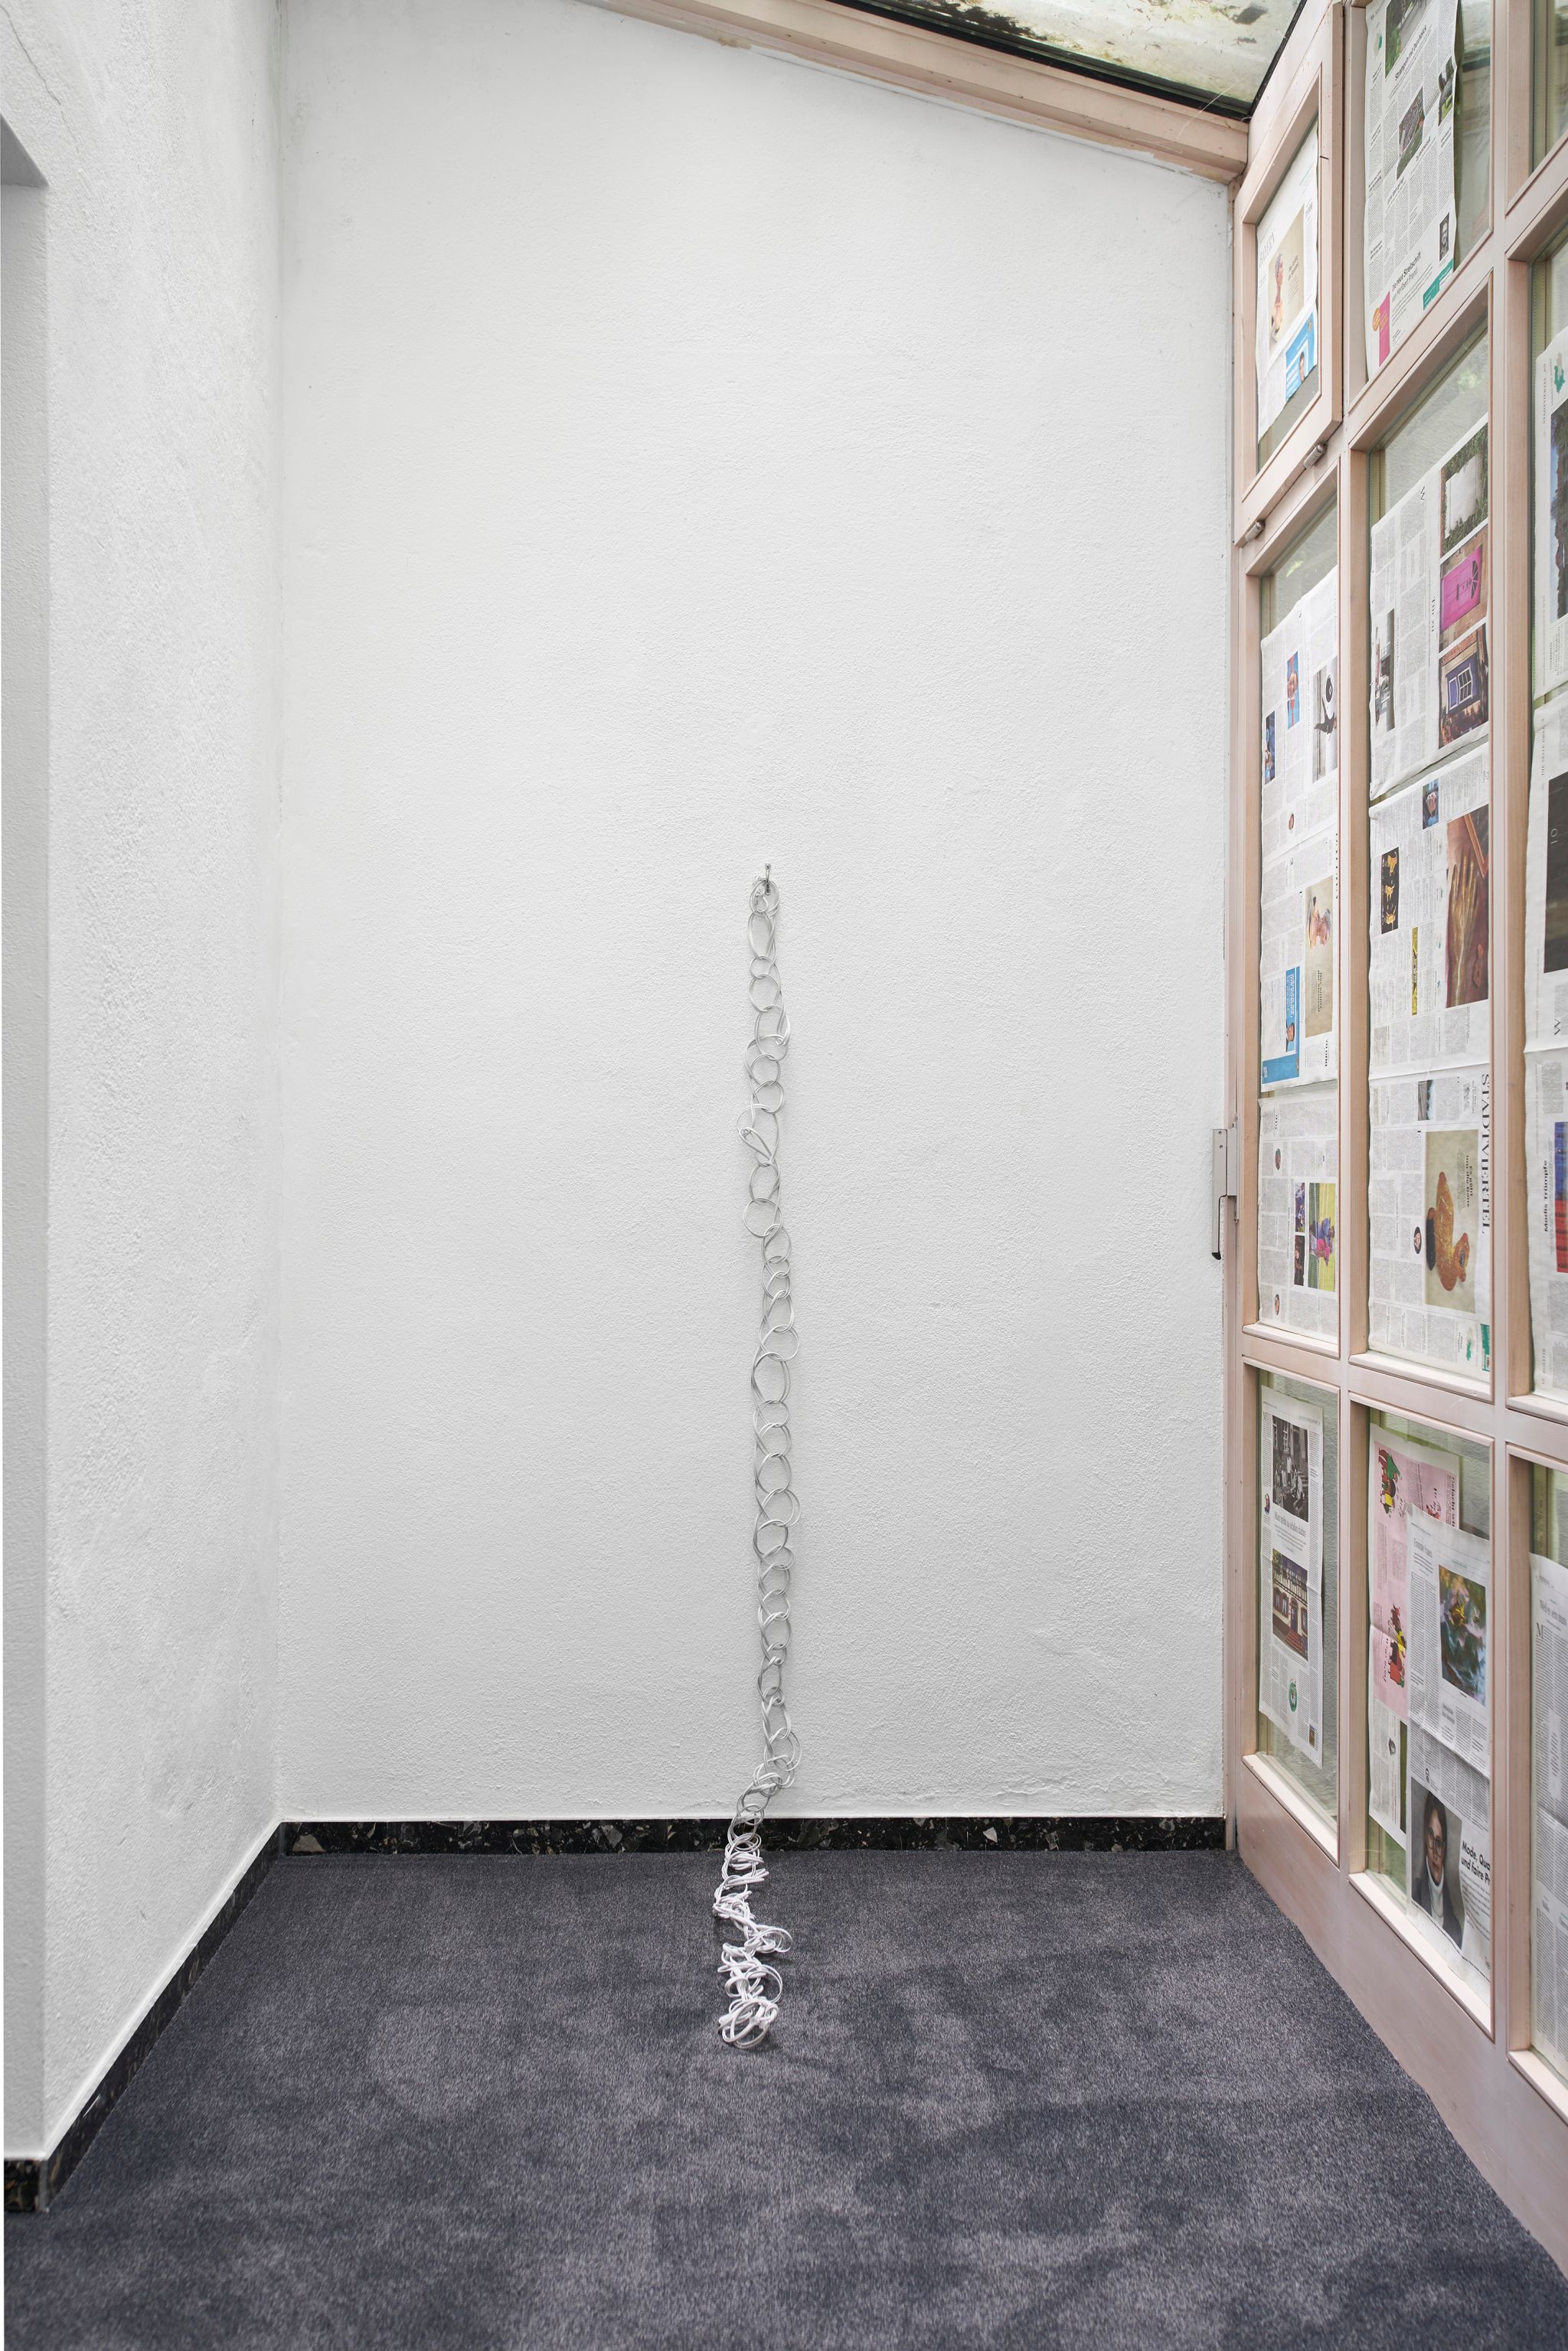 Diamond Stingily, Spine, 2018, Telephone cord, 95 ⁠× ⁠9 ⁠× ⁠2 ⁠⁠cm